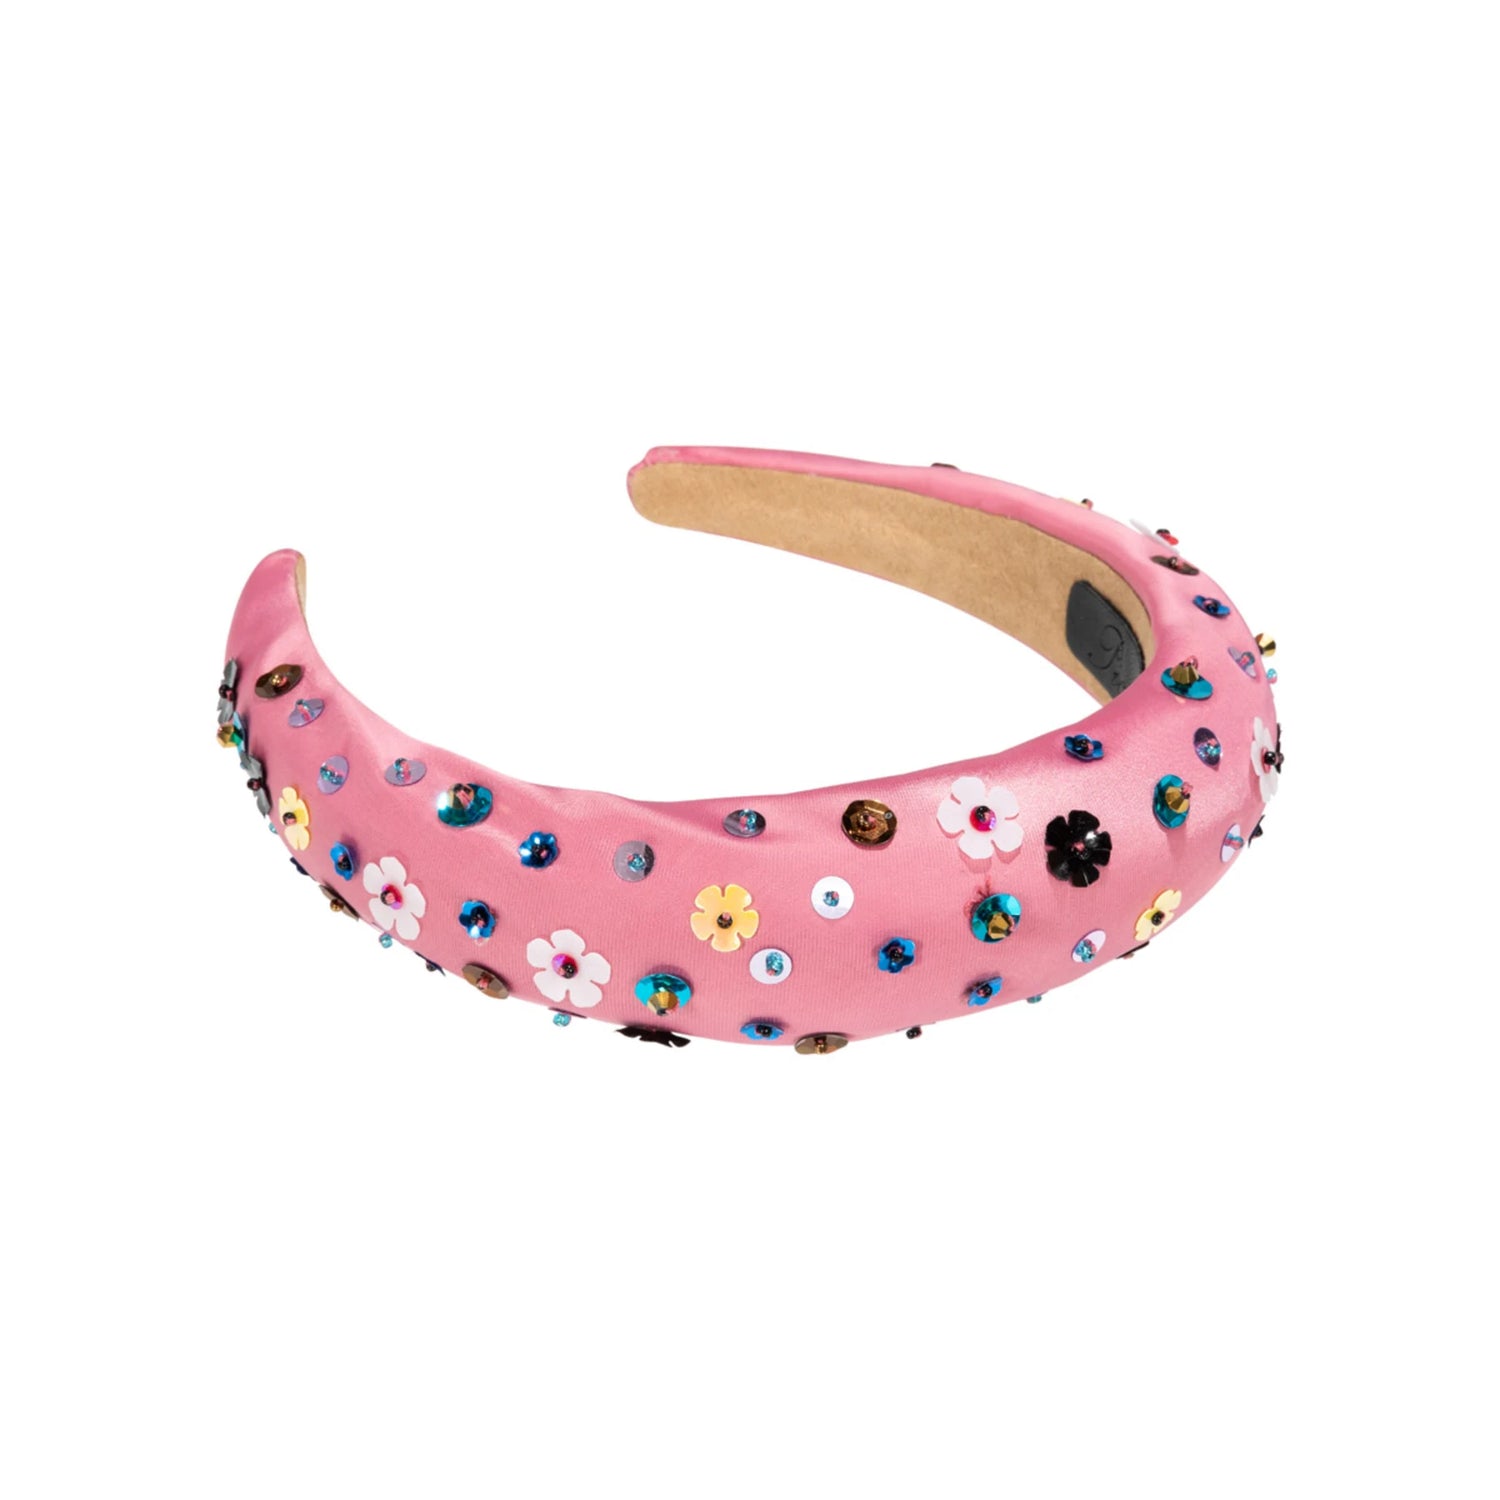 Fleur headband, pink